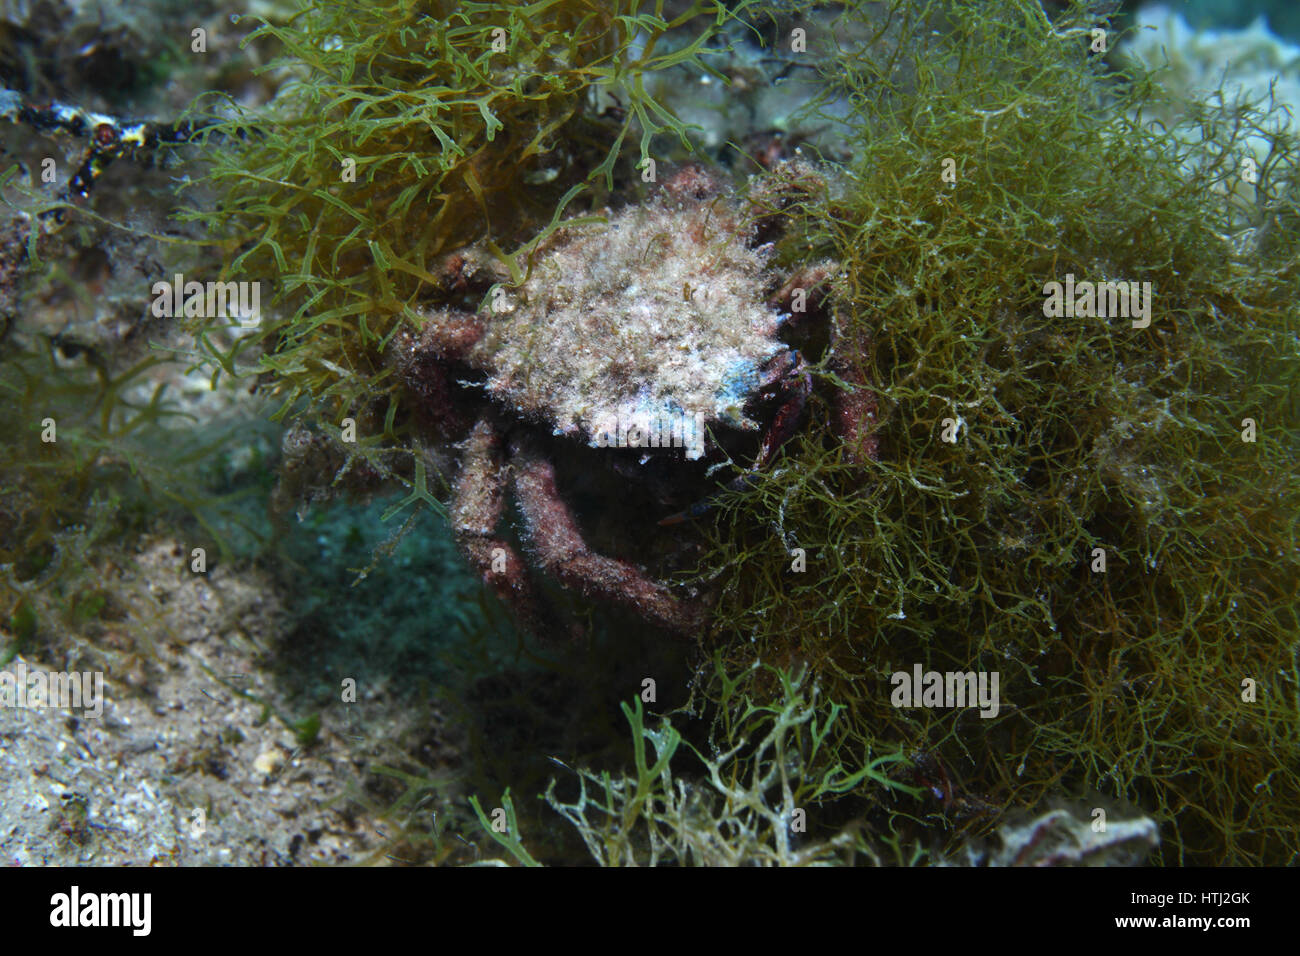 European spider crab (Maja squinado) underwater in the Mediterranean Sea Stock Photo